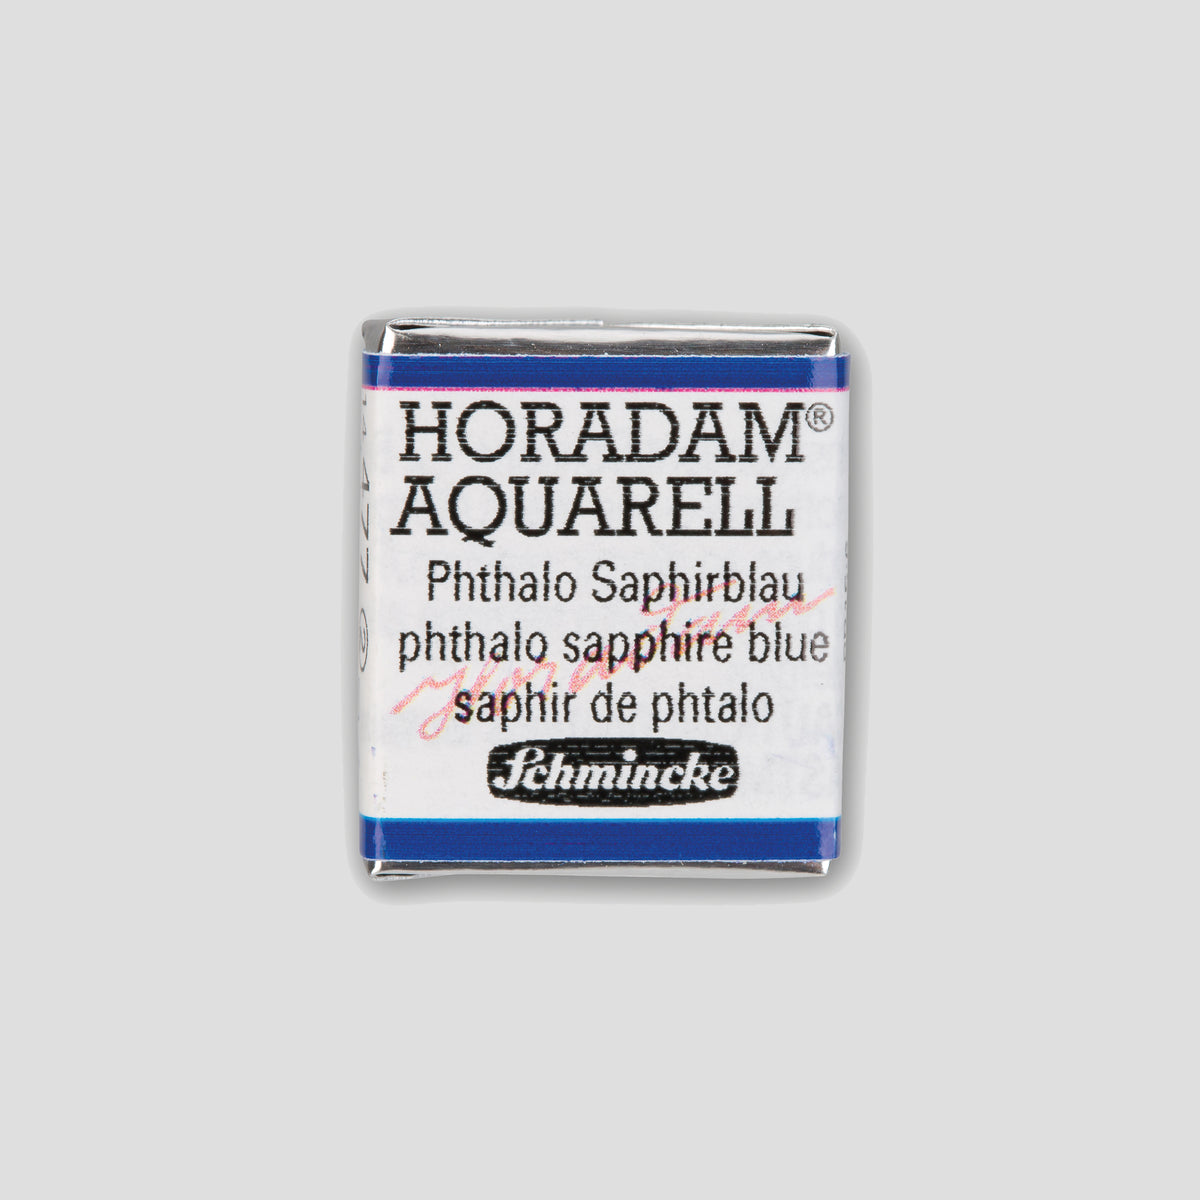 Schmincke Horadam® Halbpfanne Phthalo-Saphirblau